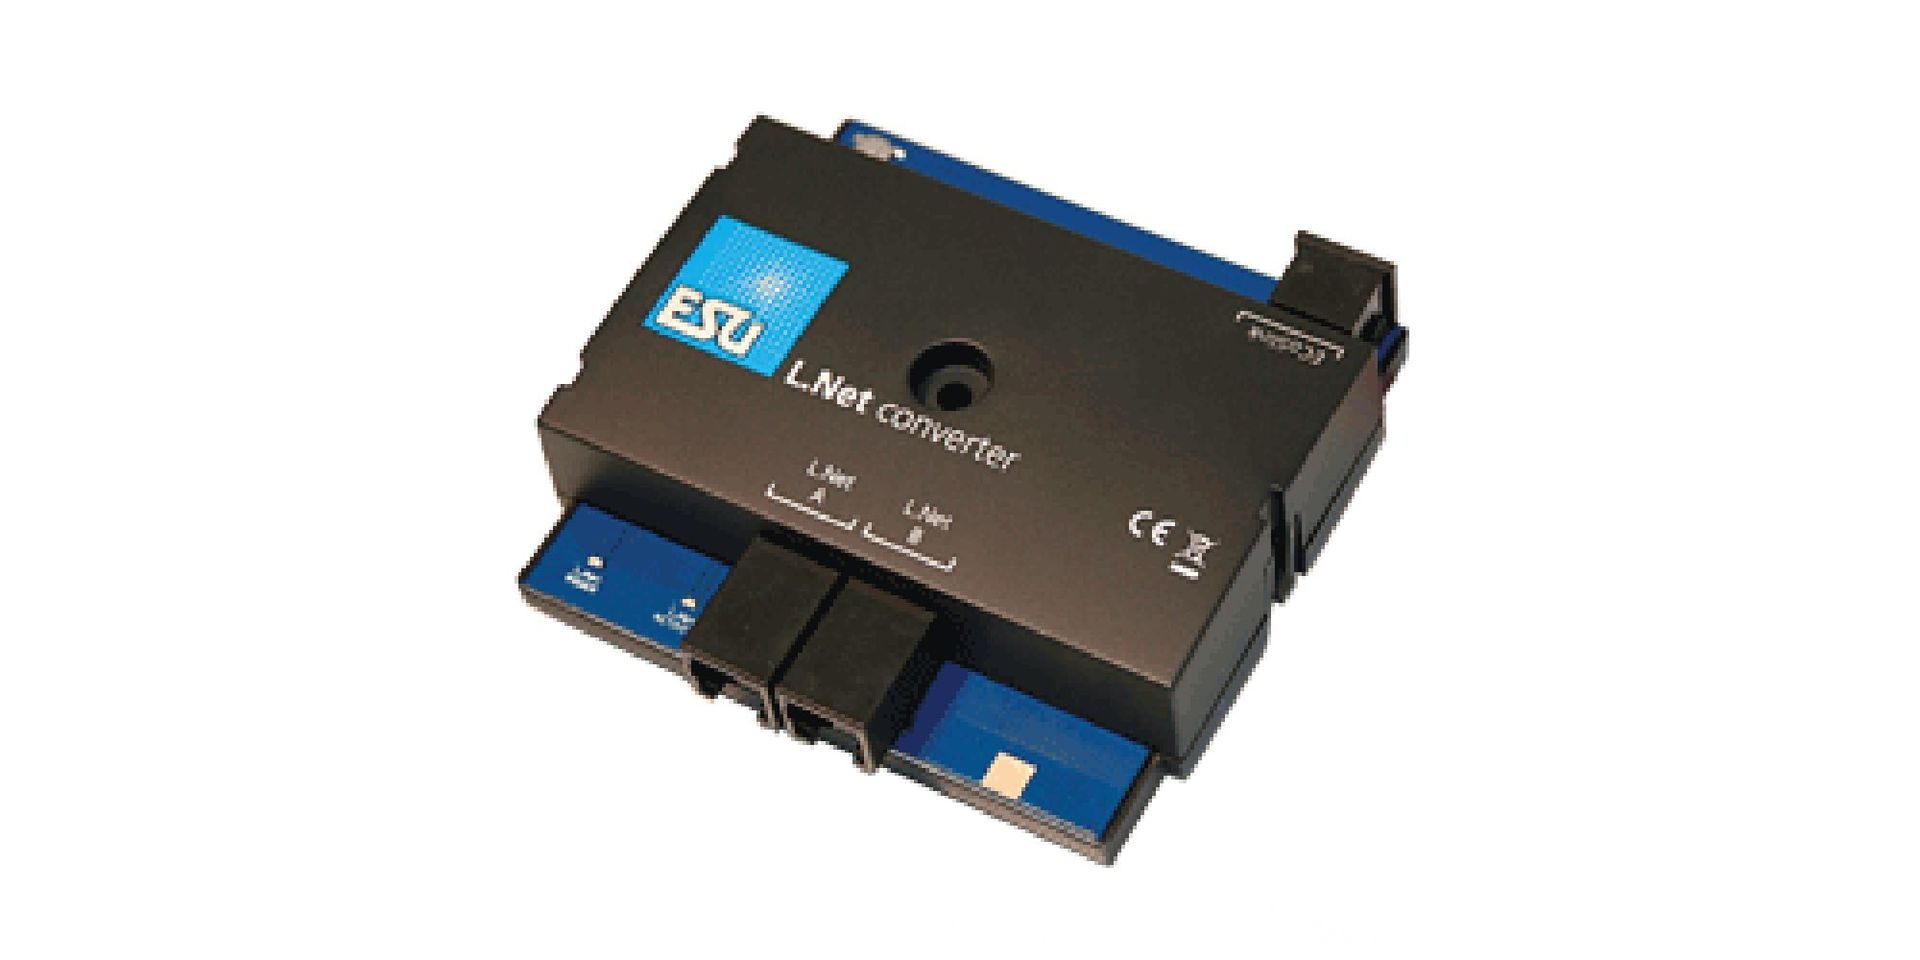 ESU 50097 - L.net converter - Der Integrator